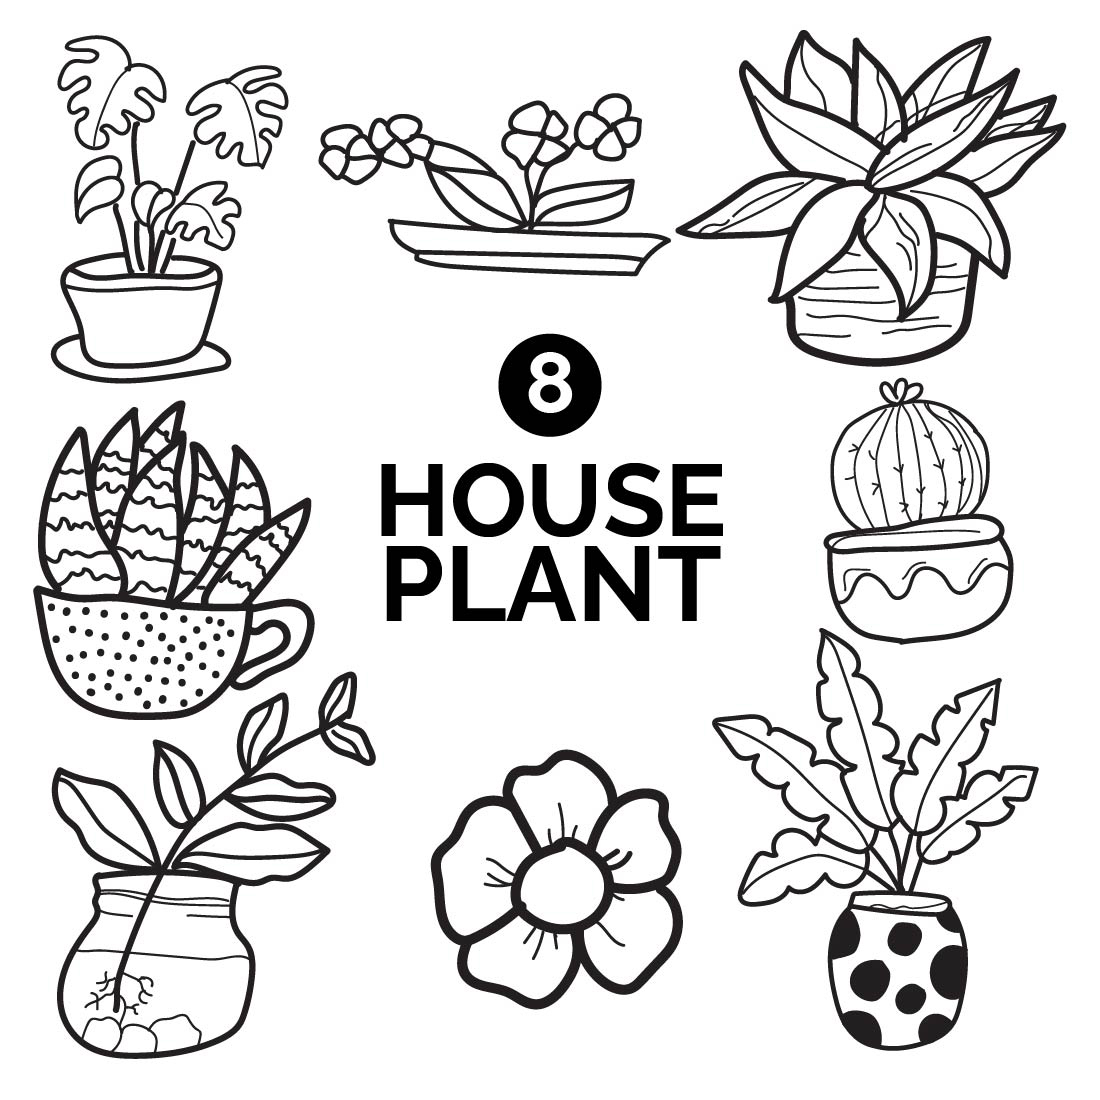 8 house plants doodle illustration preview image.